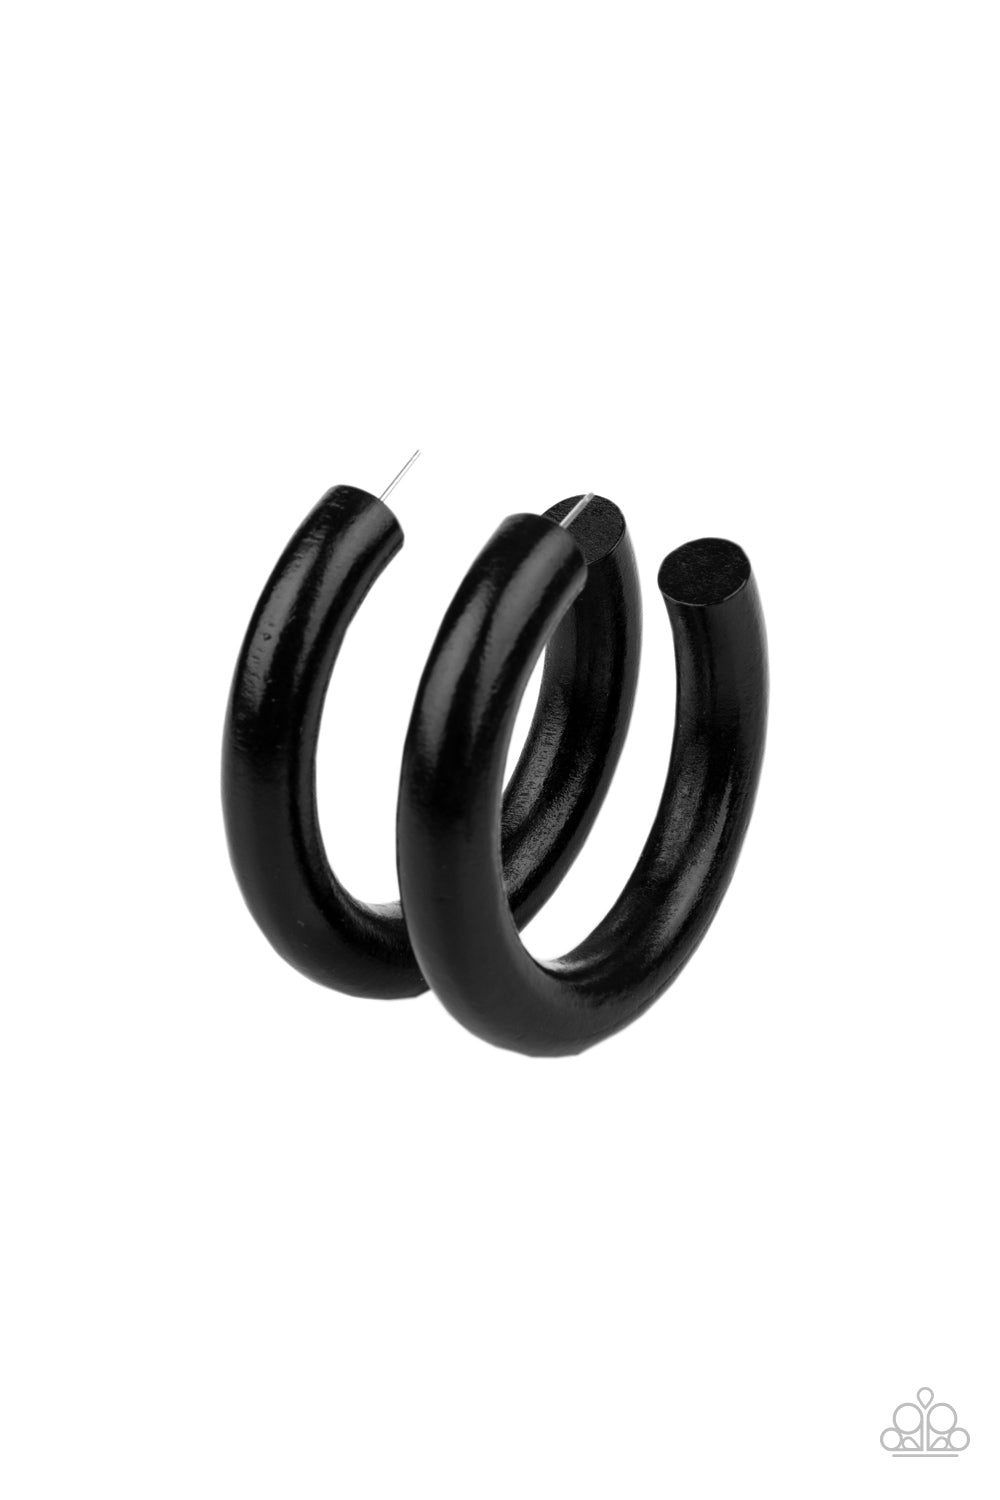 Paparazzi Accessories - I WOOD Walk 500 Miles #E267 - Black Earrings